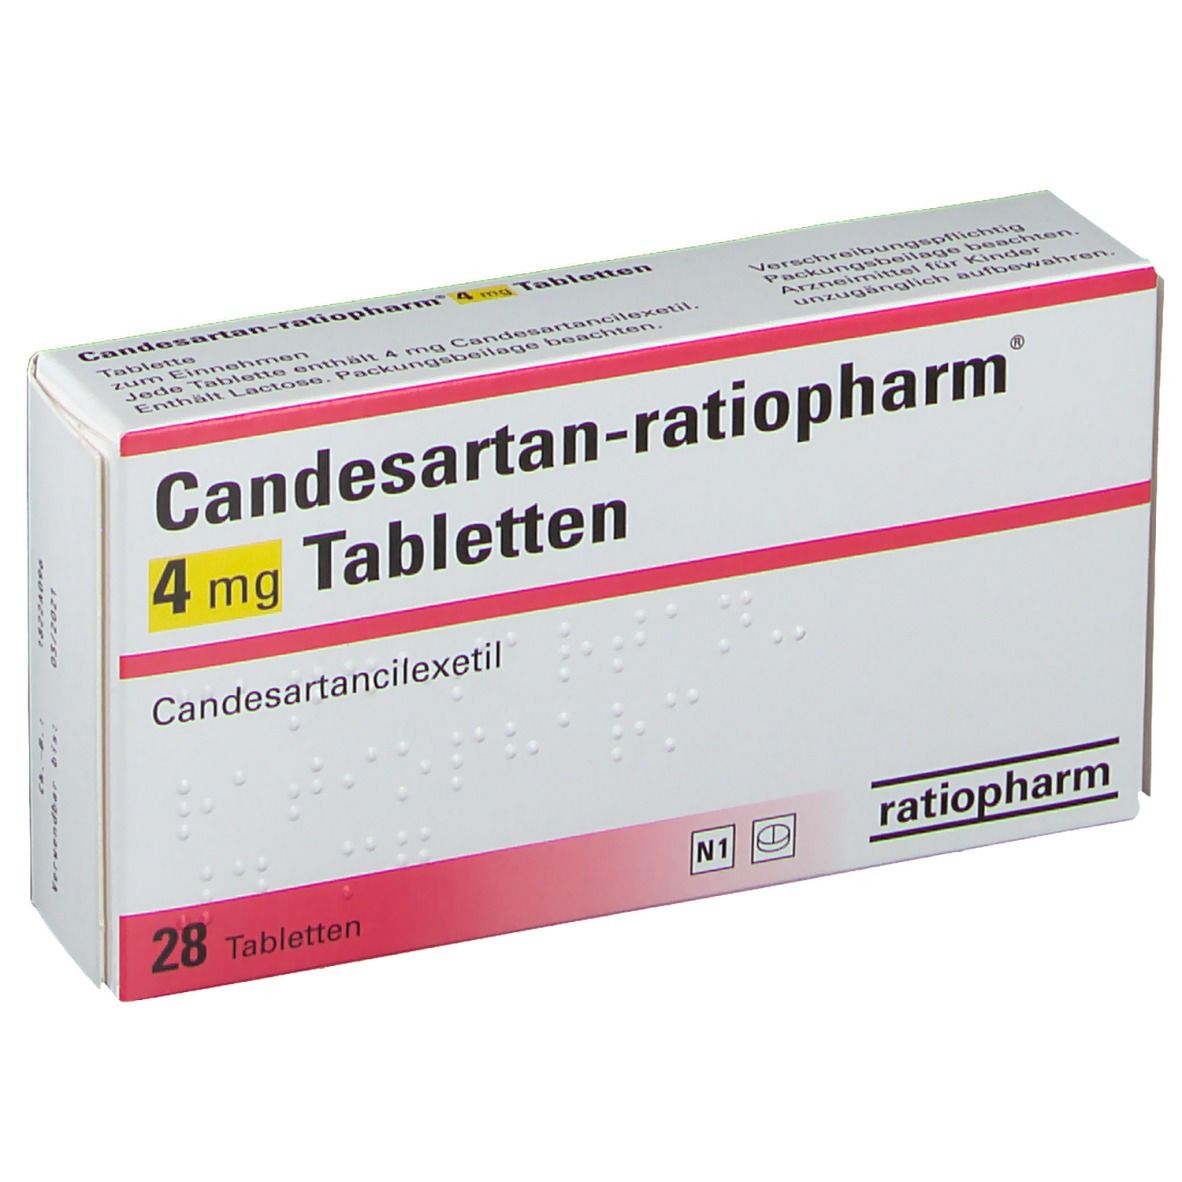 Candesartan-ratiopharm® 4 mg